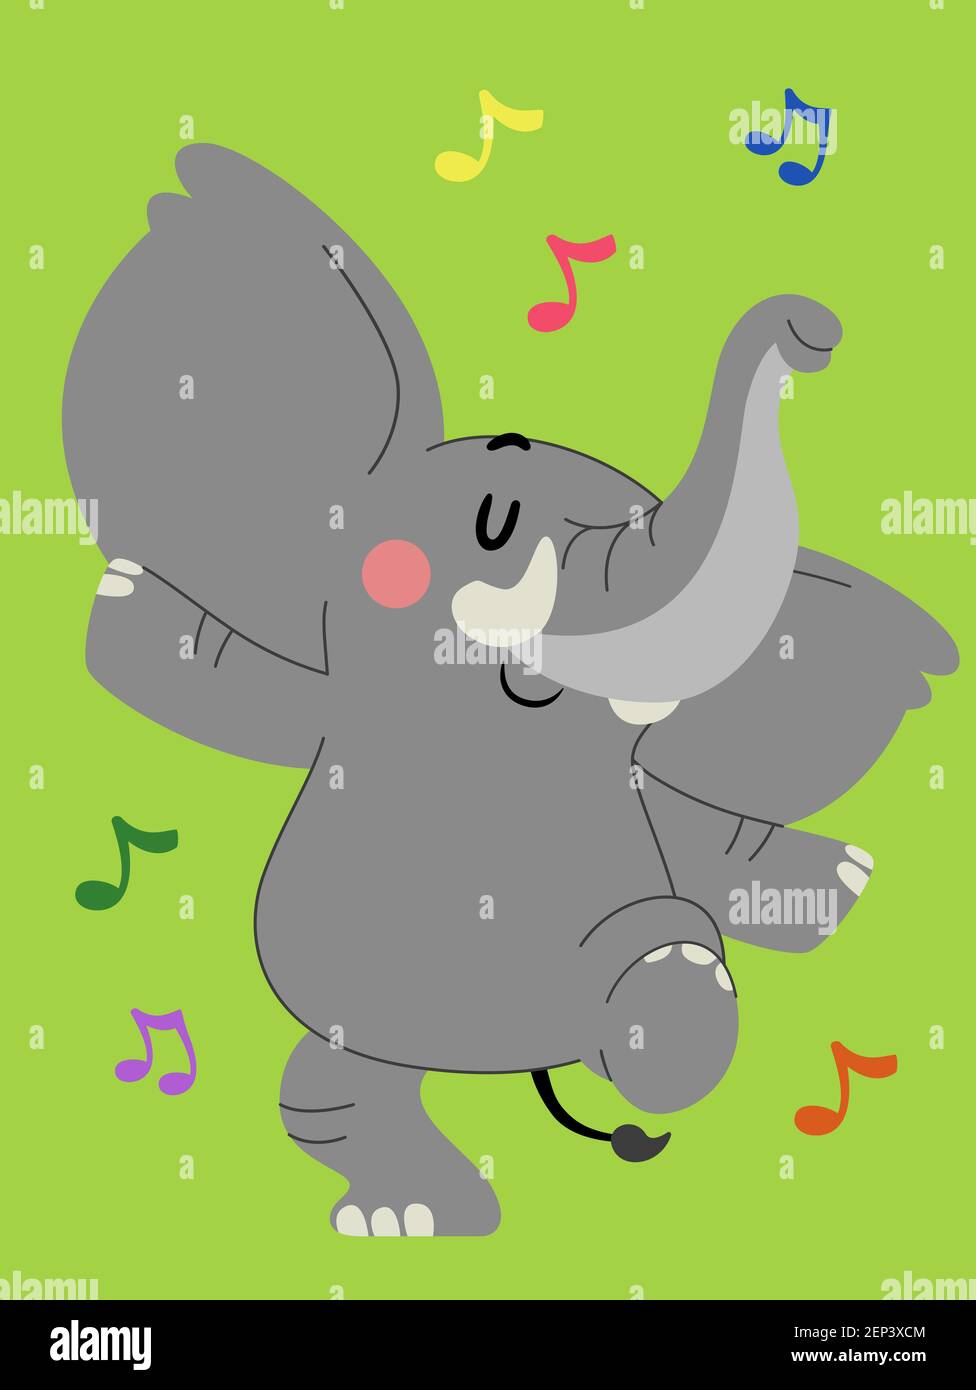 Танец слоники